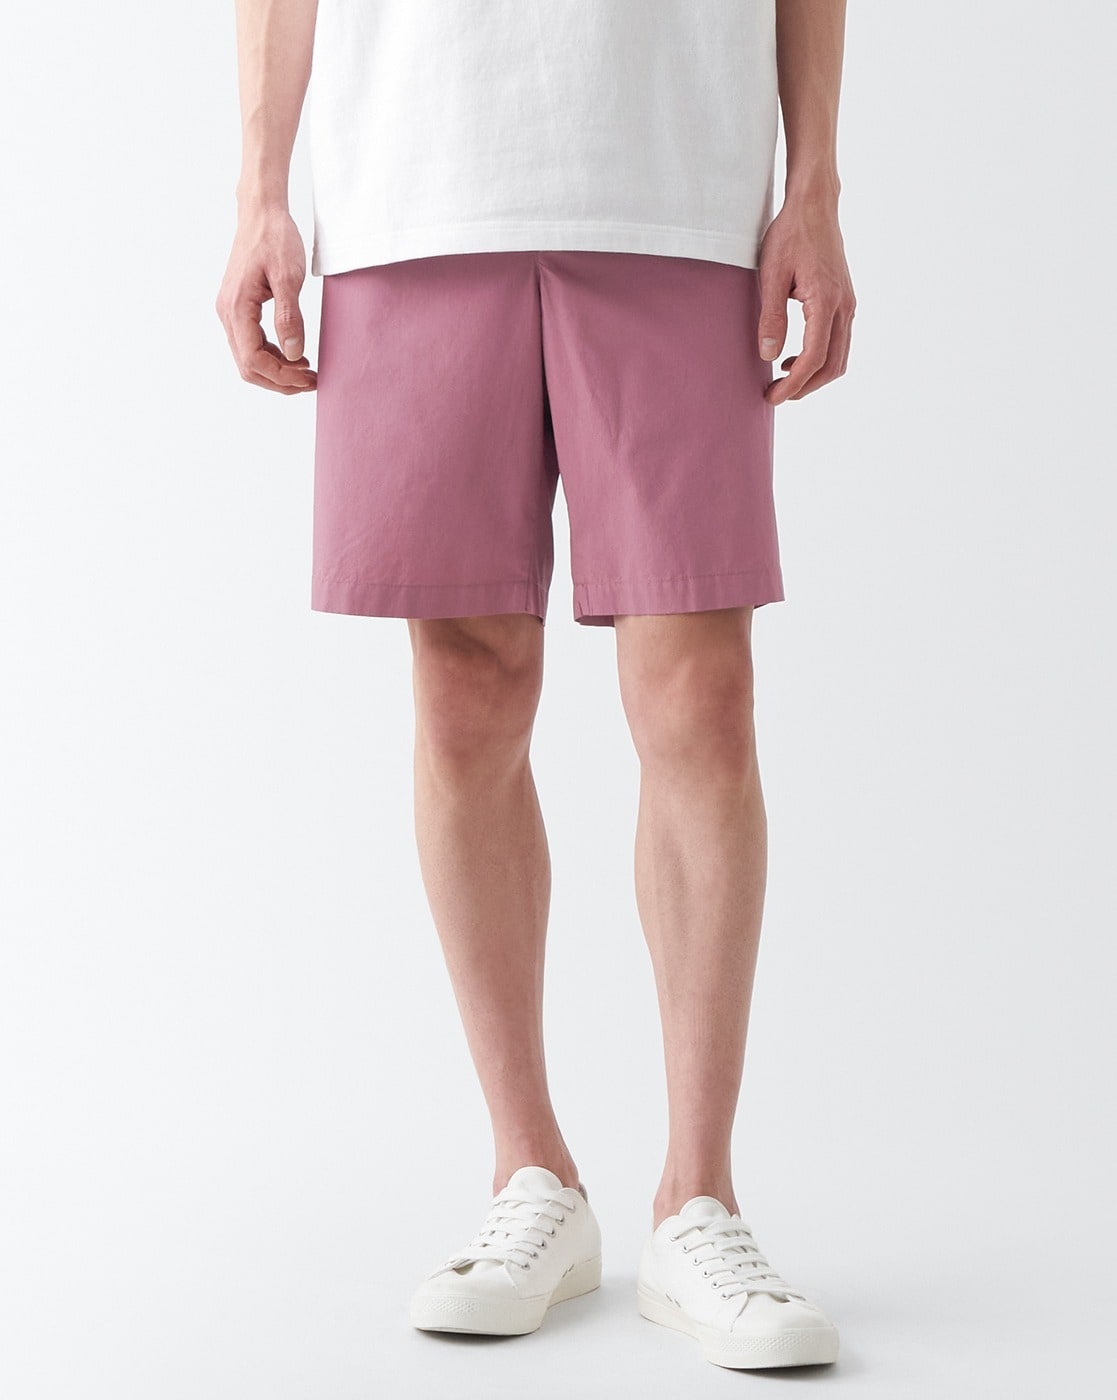 shorts men  Buy shorts men Online Starting at Just 228  Meesho